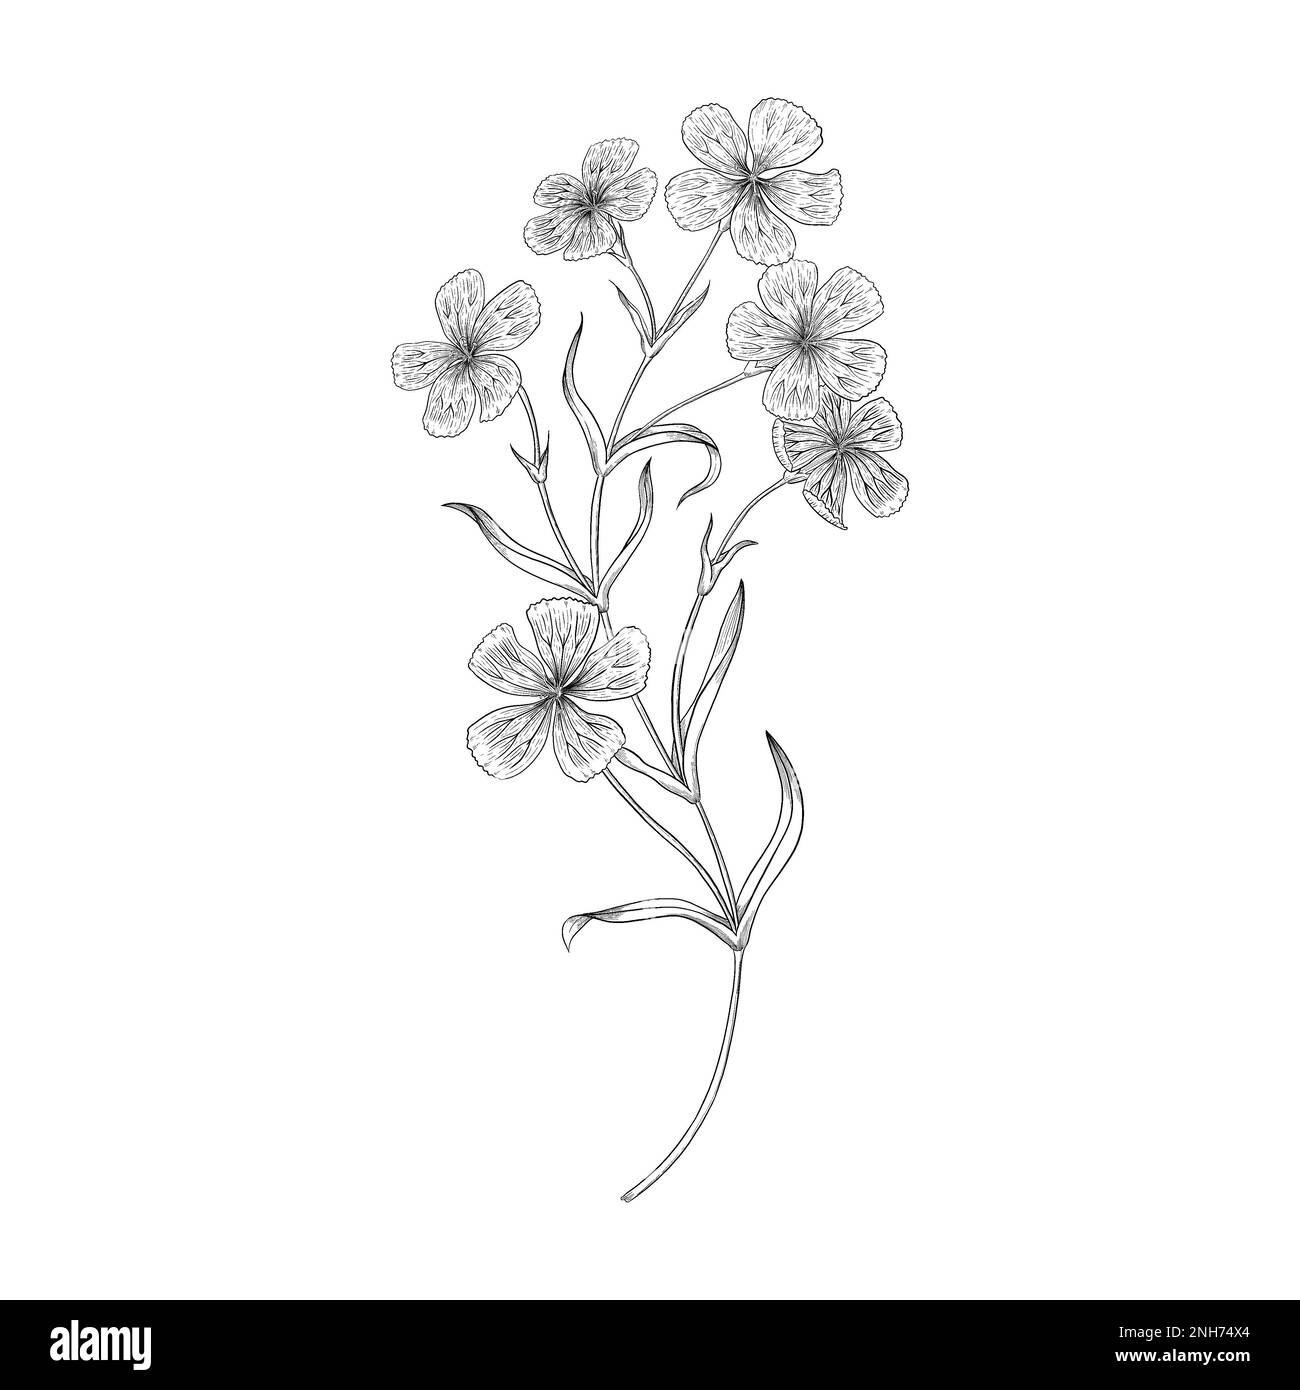 Dianthus flowers outline illustration. Line art digitally drawn illustrations. Stock Photo